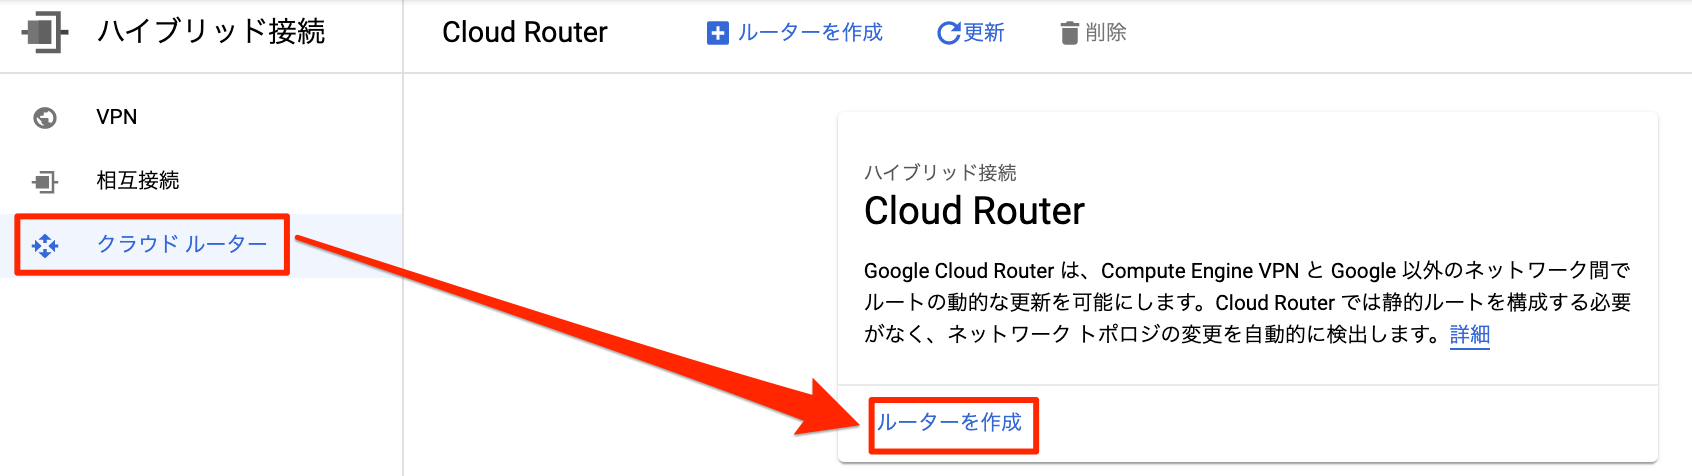 Cloud_Router_–ハイブリッド接続–qwiklabs-gcp-01-bc4…–_Google_Cloud_Platform.png